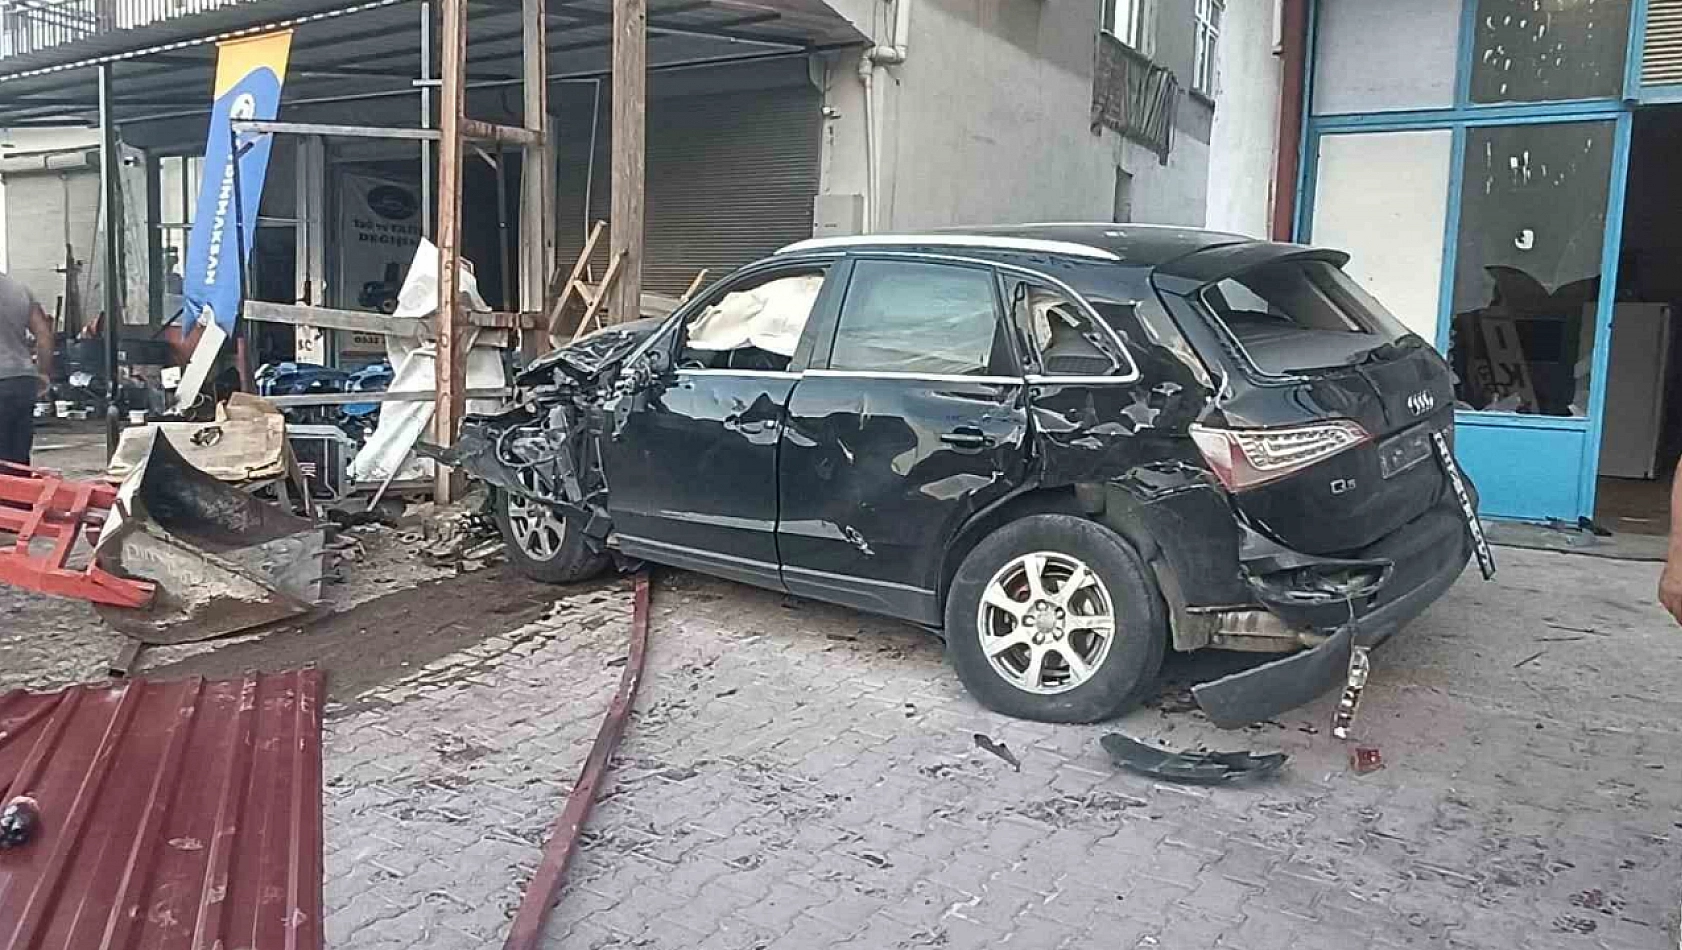 Malatya'da U dönüşü sırasında kaza: 4 yaralı